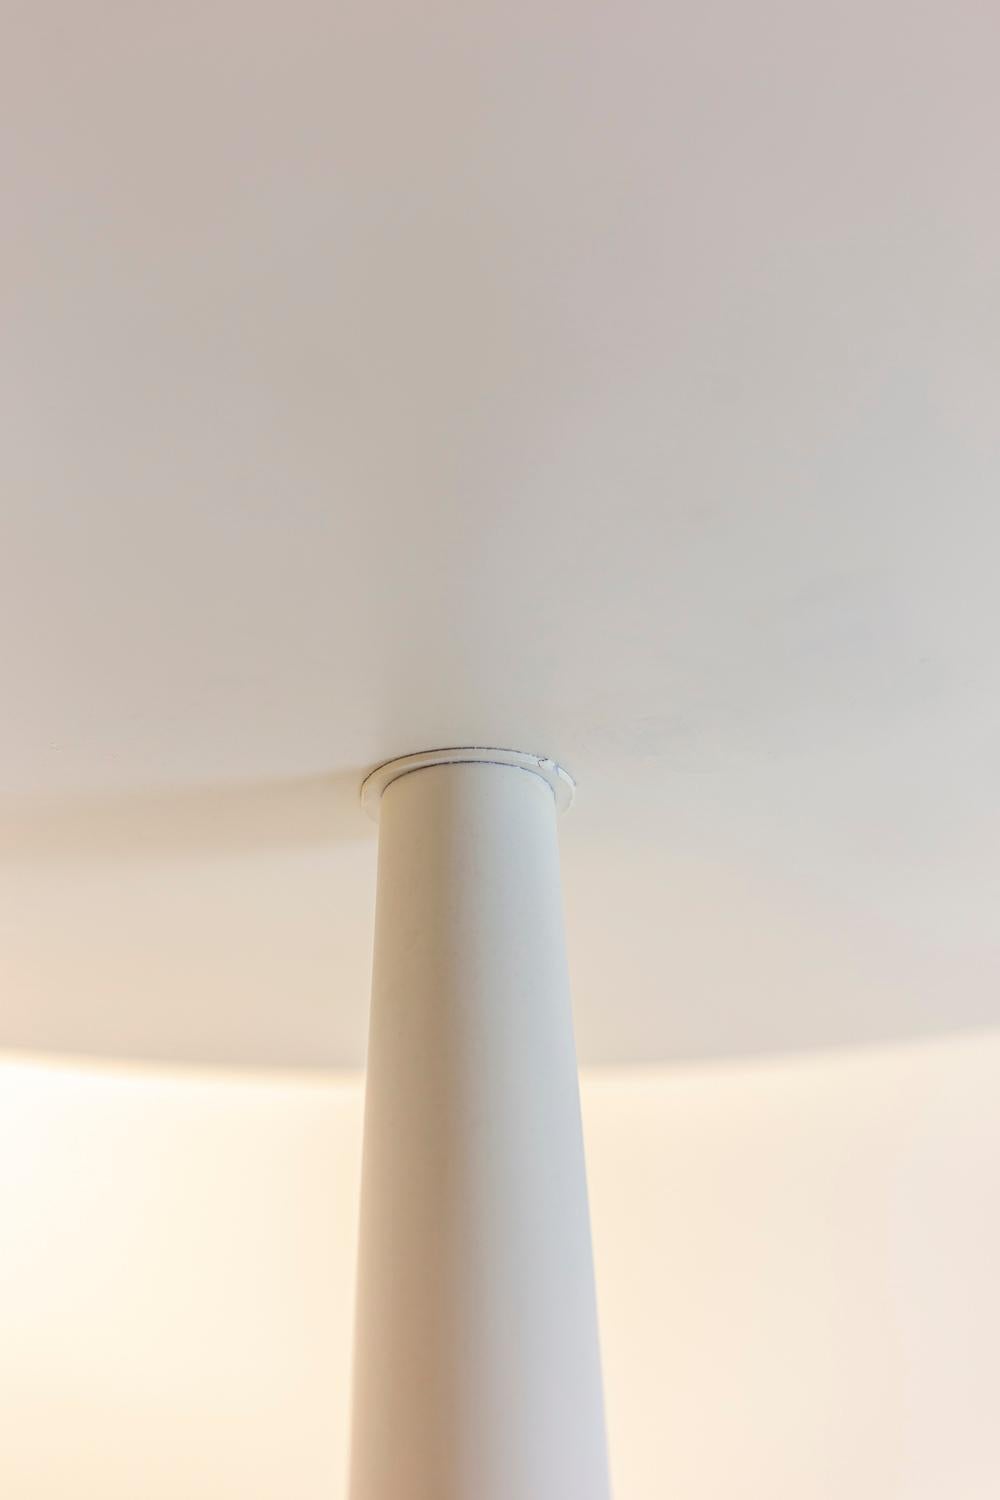 European Luc Ramael Pour Prandina, Floor lamp “Équilibre F33” in Polypropylene